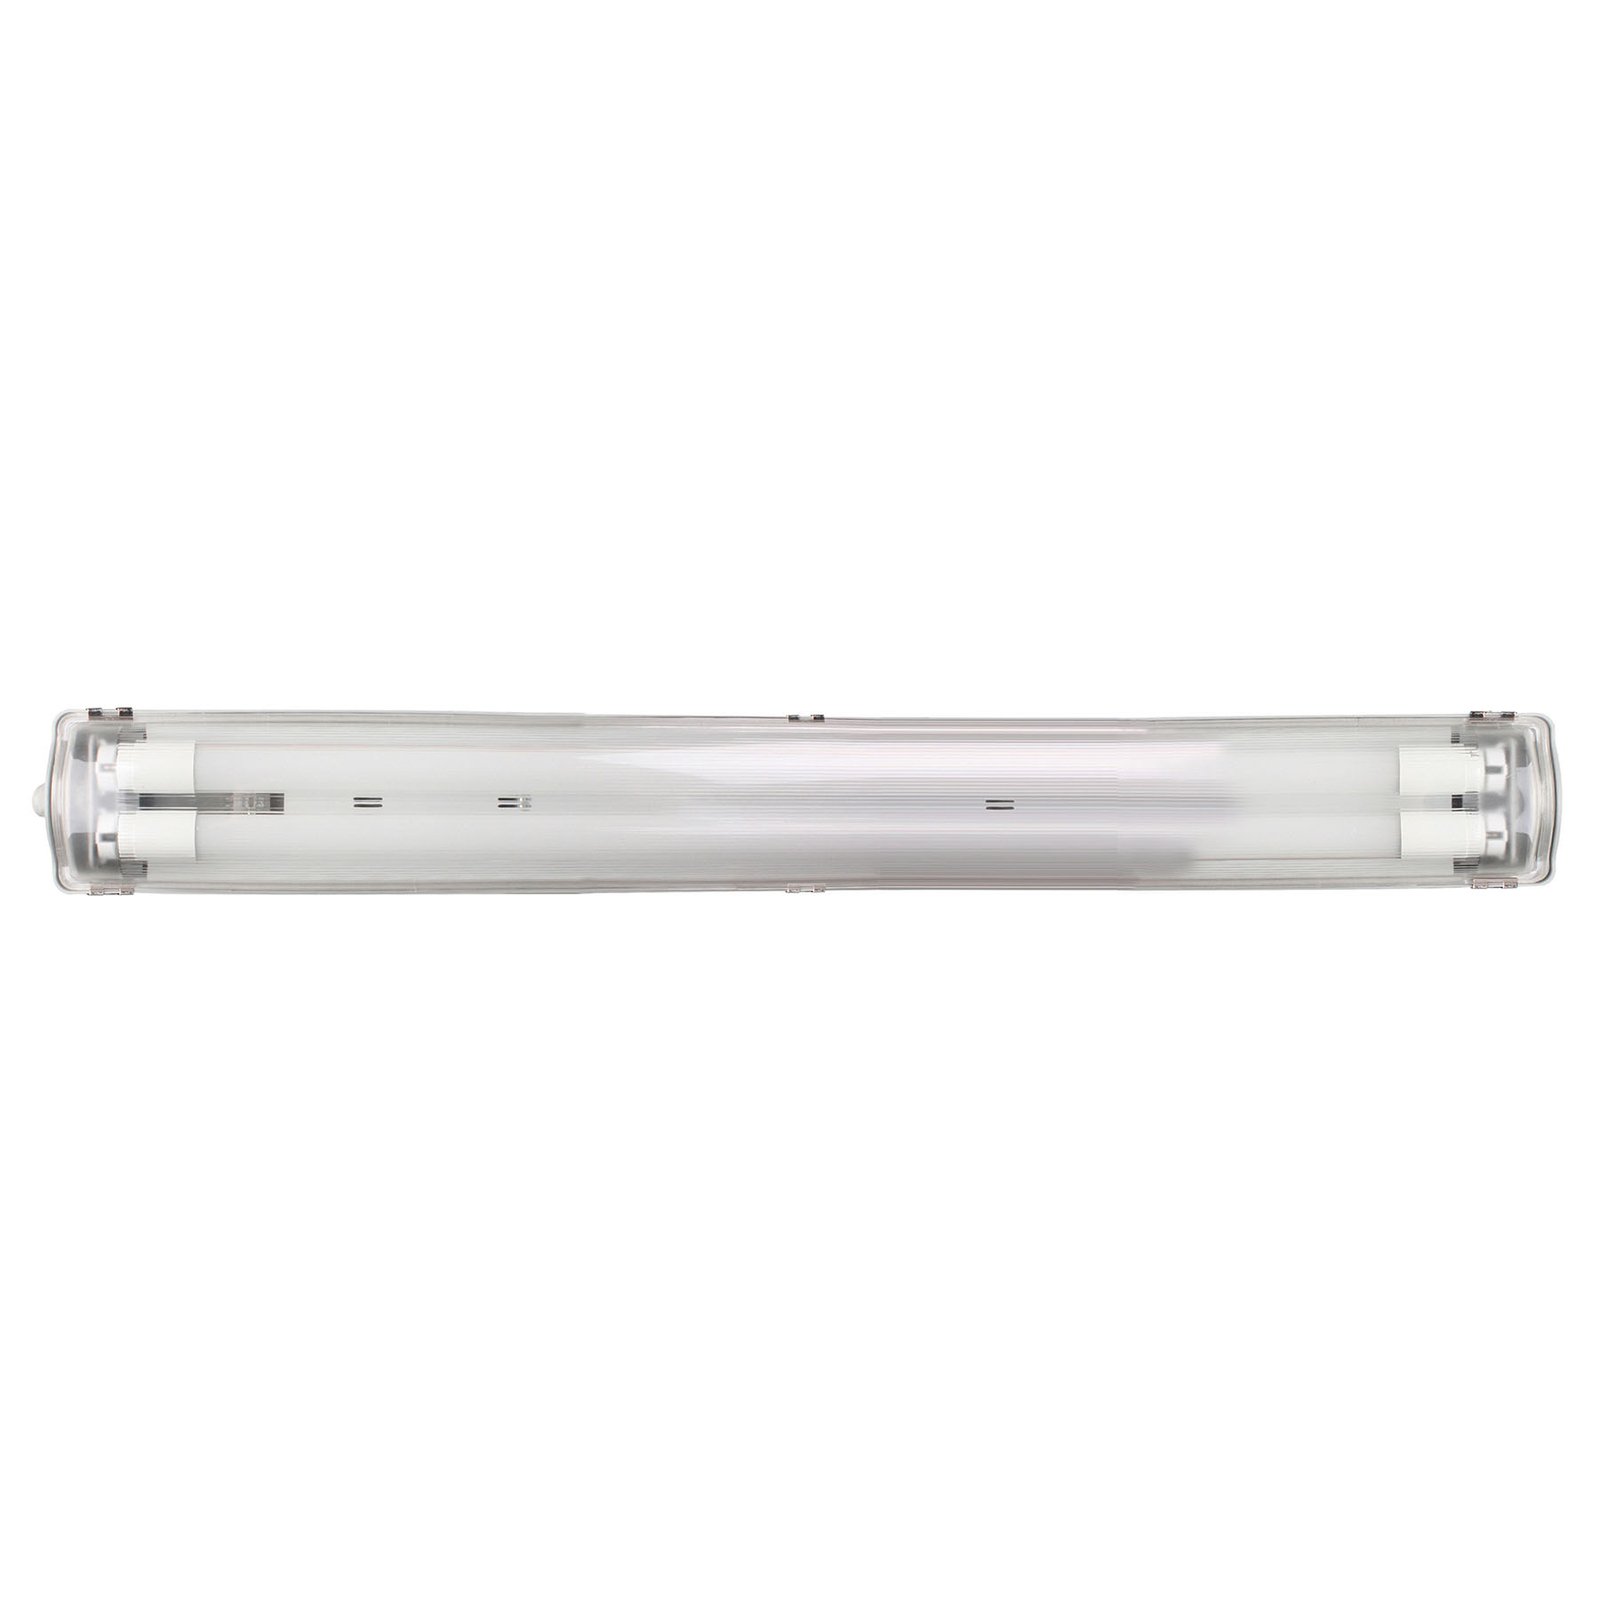 LED světlo do vlhka Aqua-Promo 2/60, 66,8cm